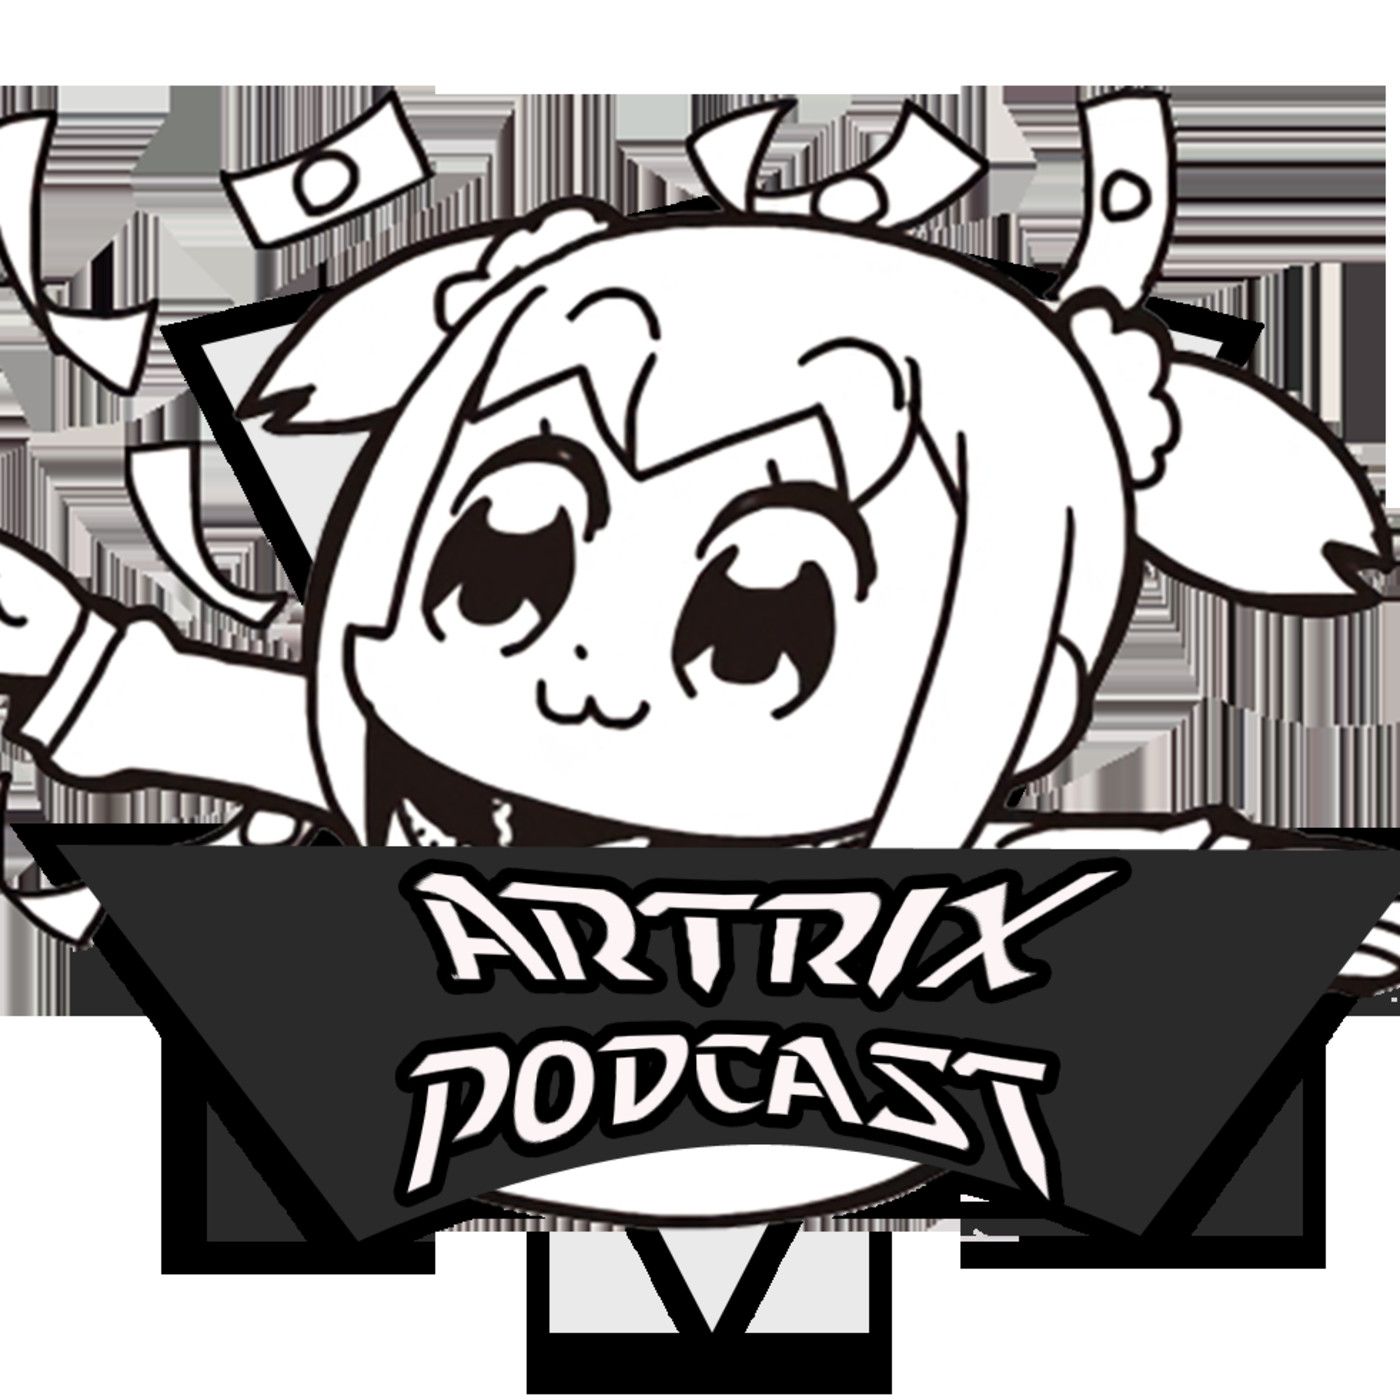 Artrix Anime Podcast: El Iceberg del Anime